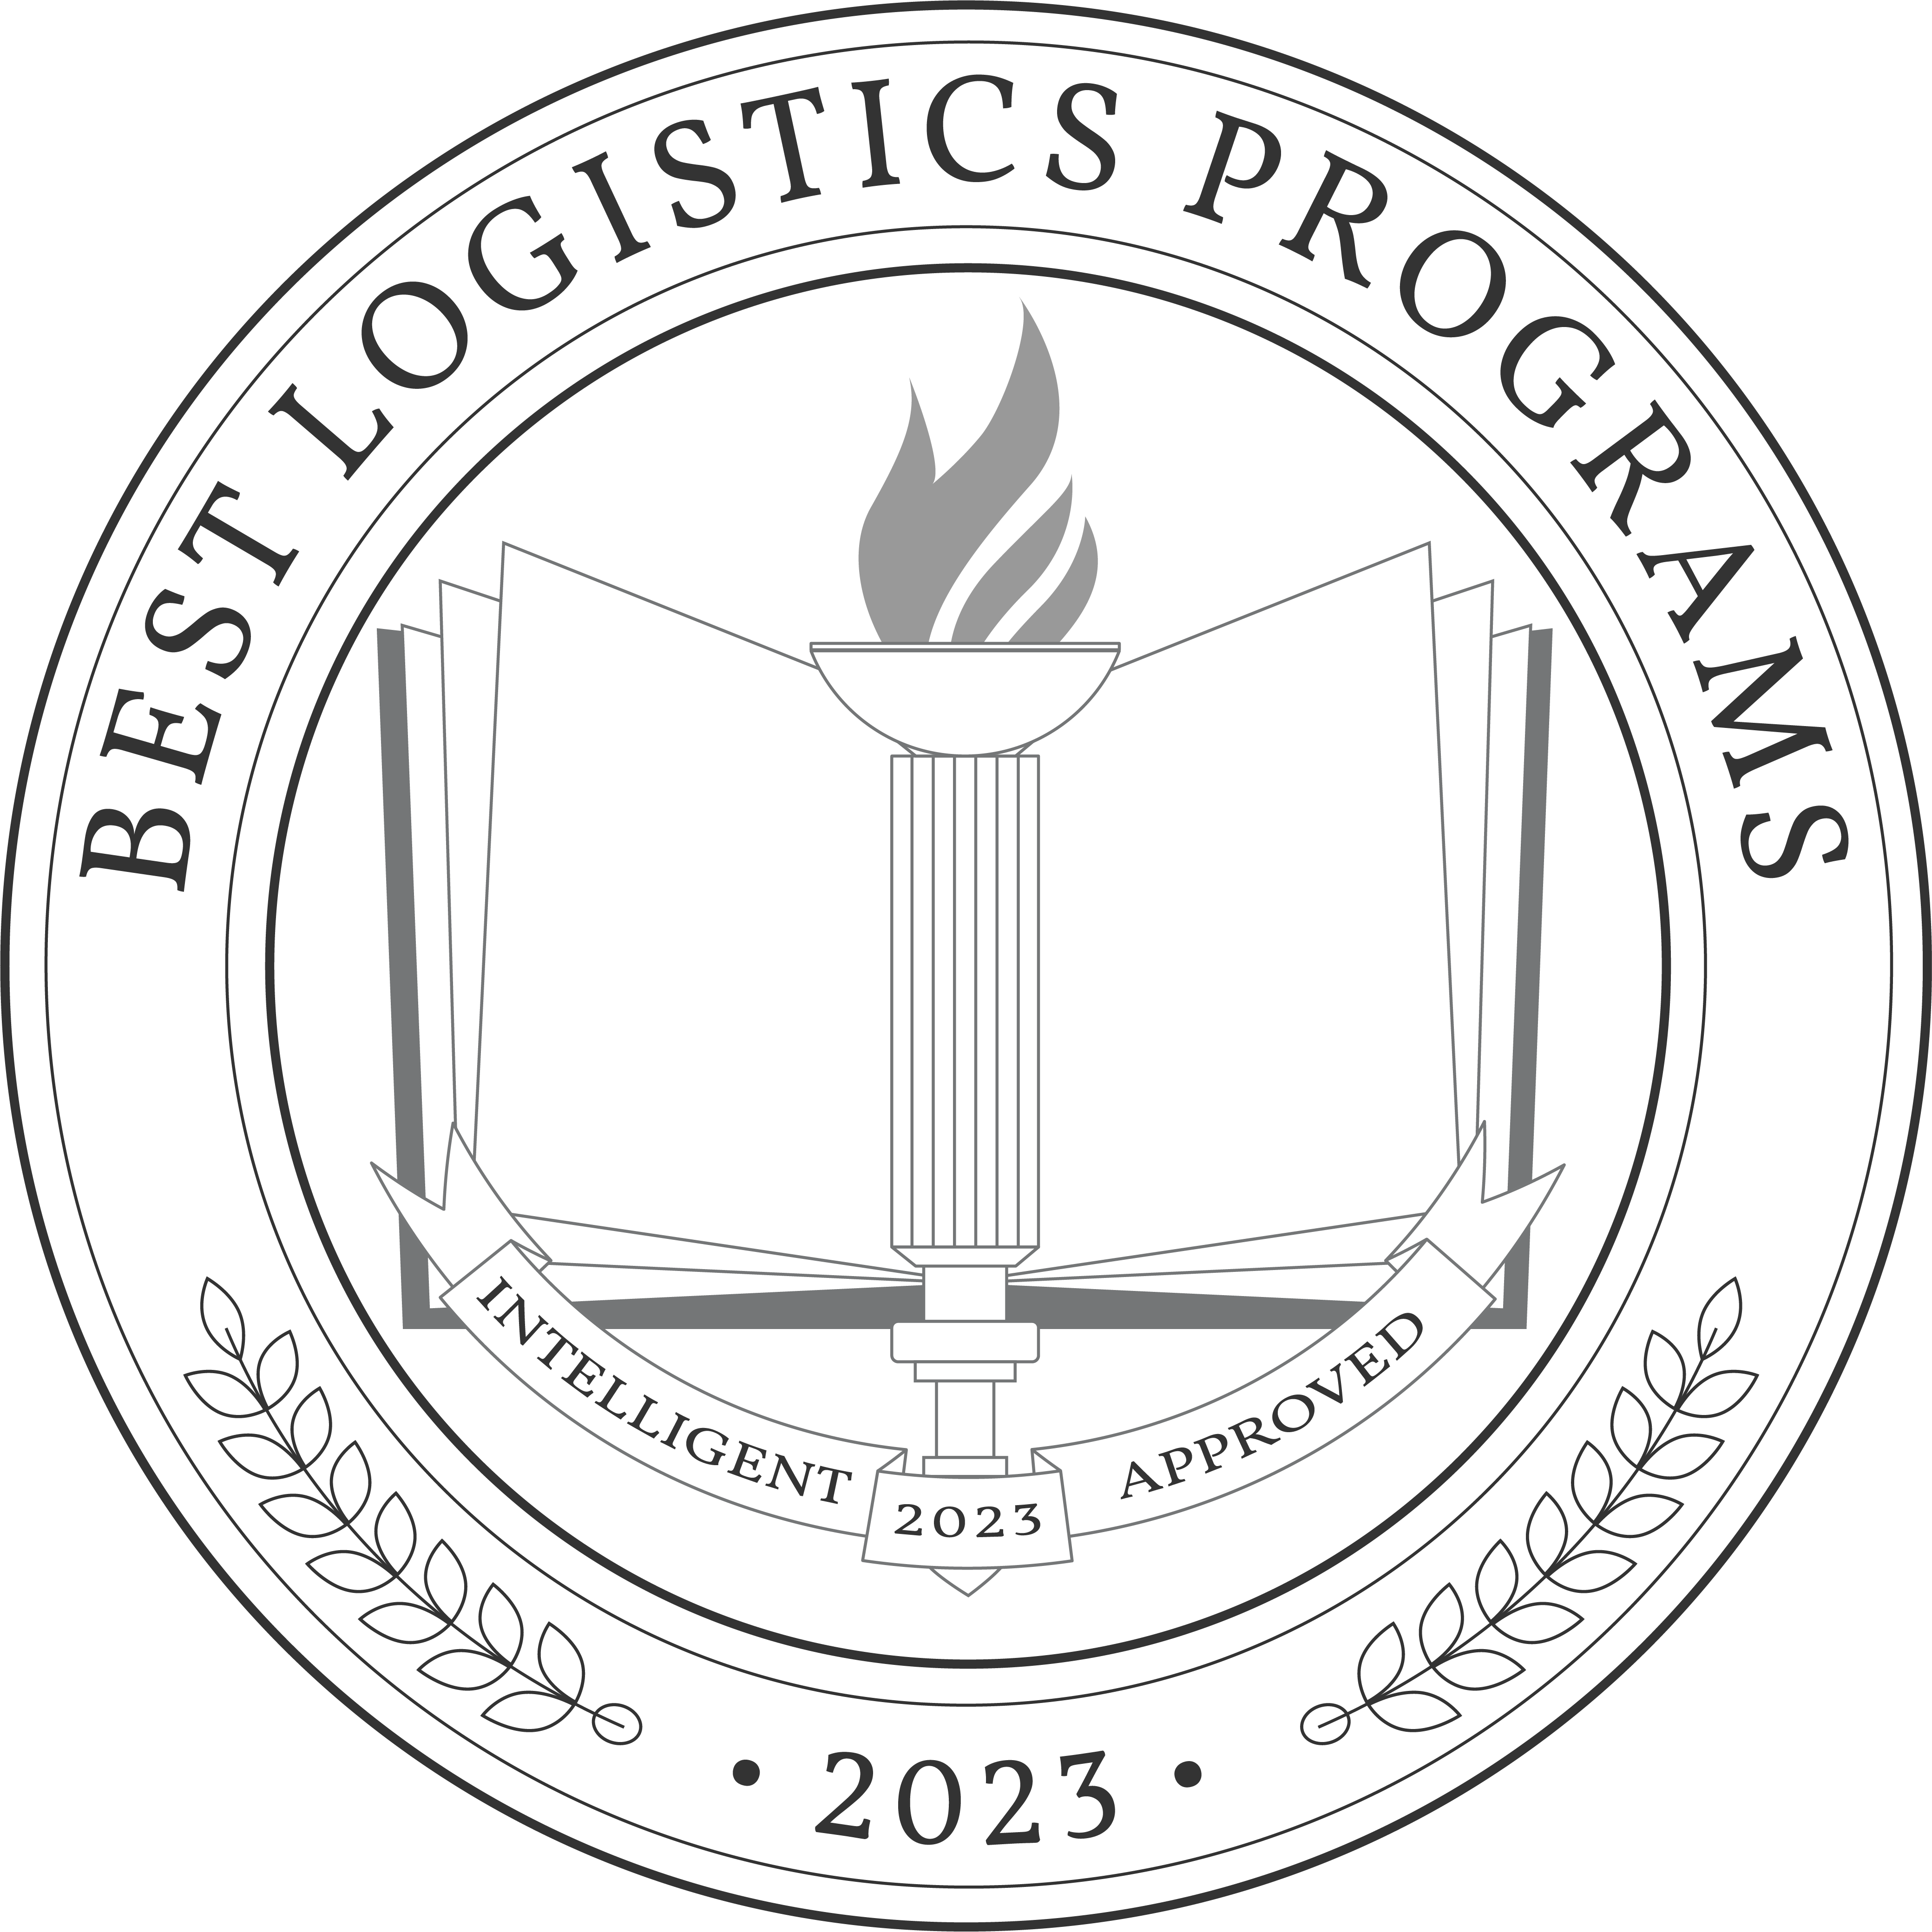 Best Logistics Programs badge